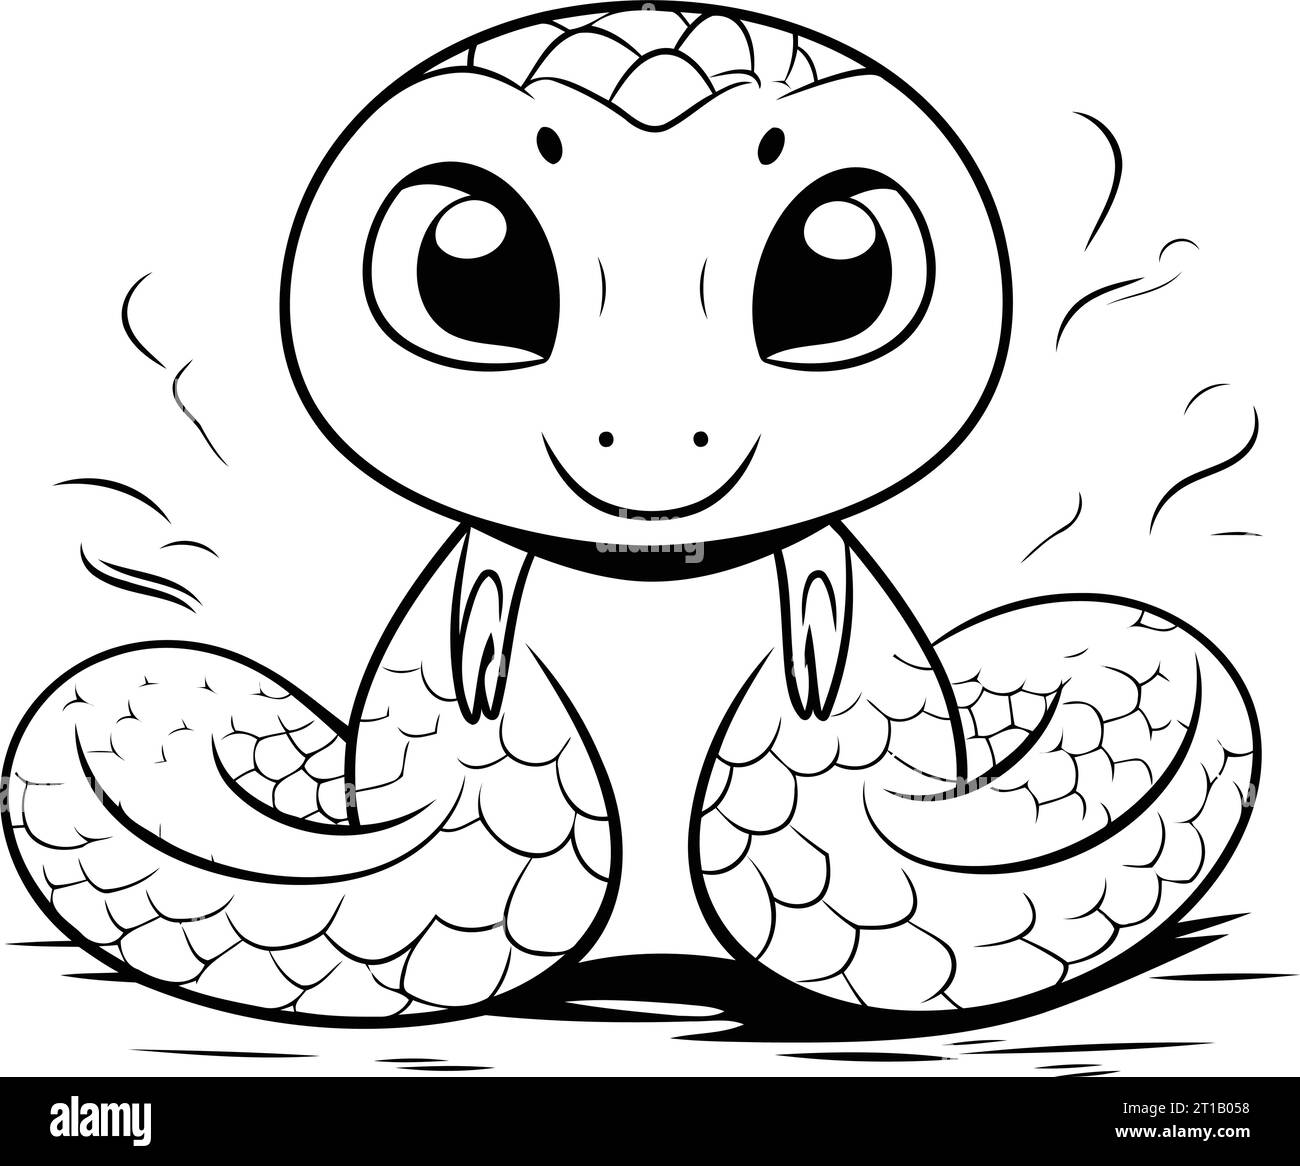 Cute cartoon snake. Coloring book for children. Vector illustration. Stock Vector